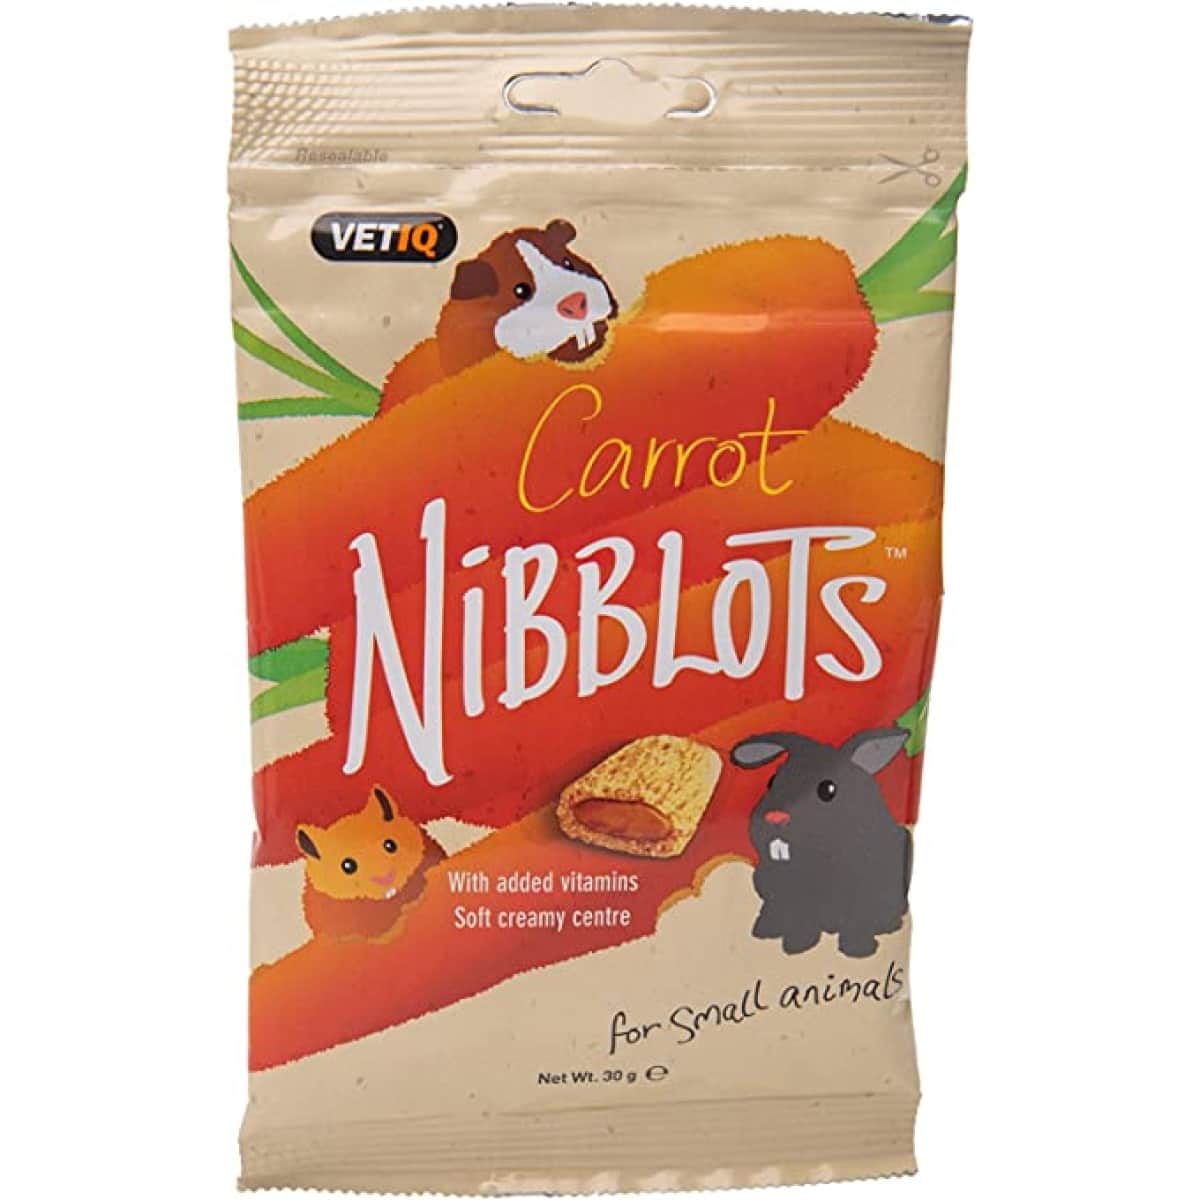 VetIQ Nibblots 30g - Carrot Main Image